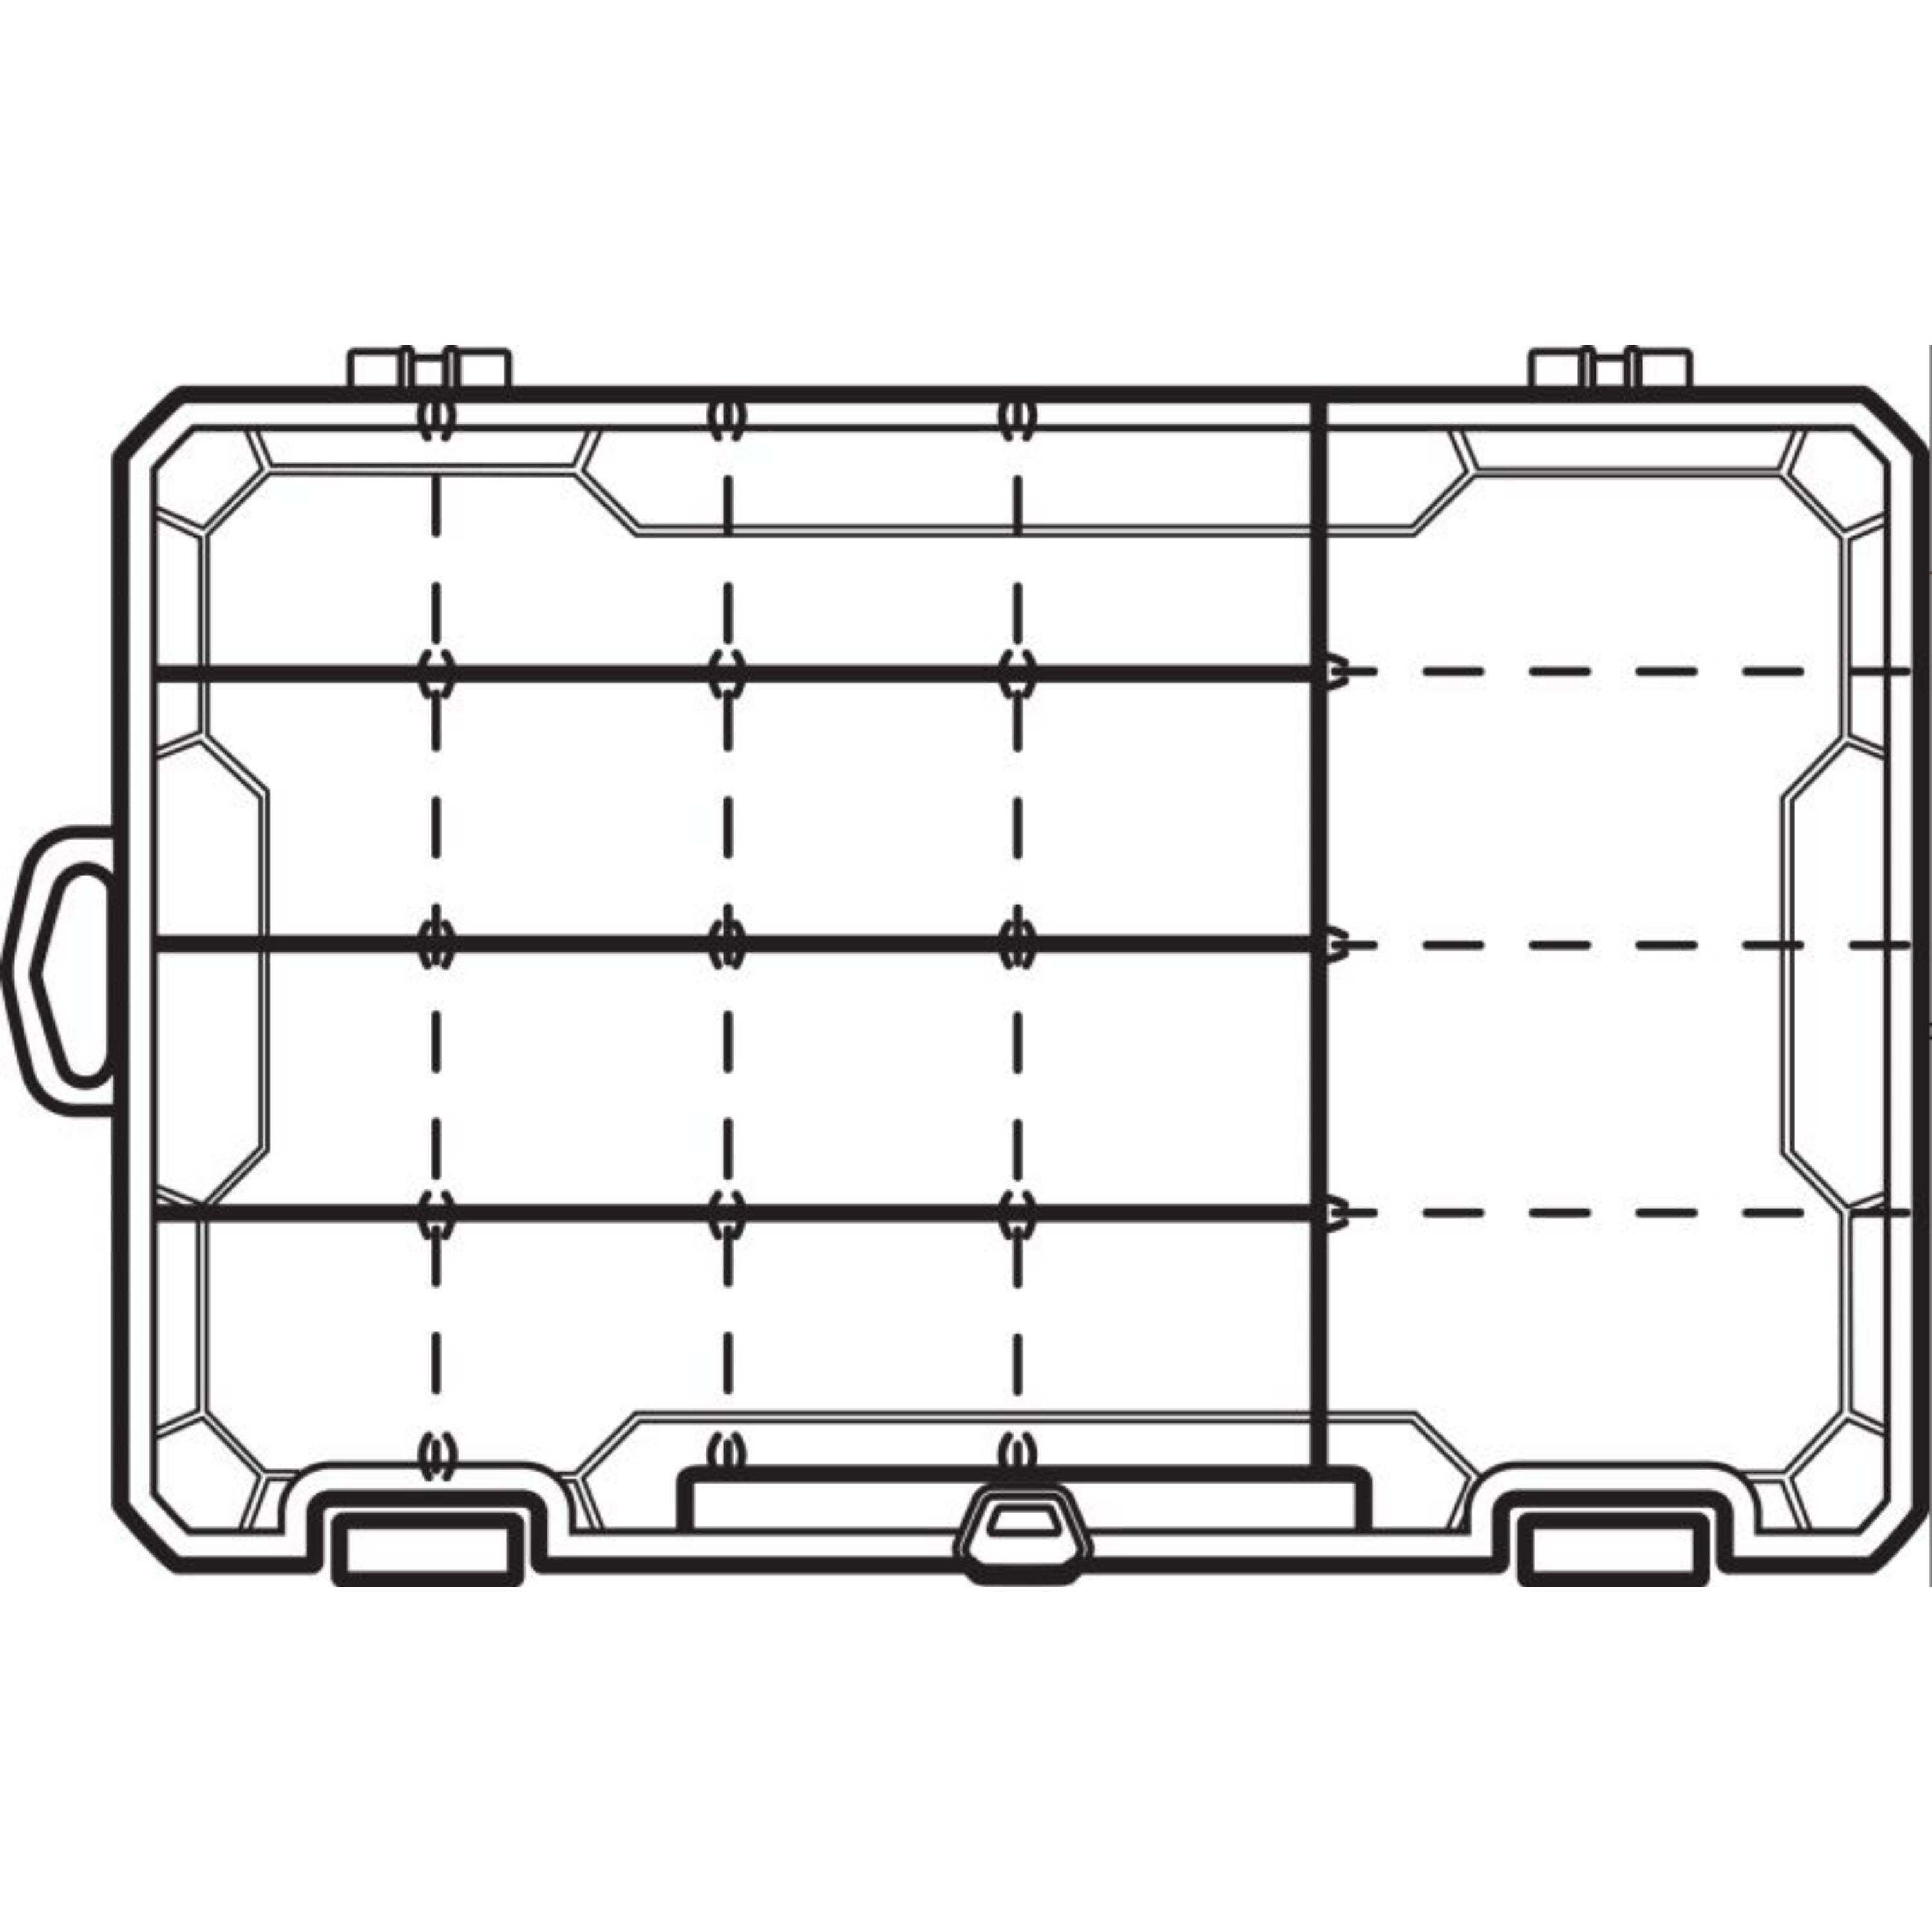 Utility Box - 20 compartments